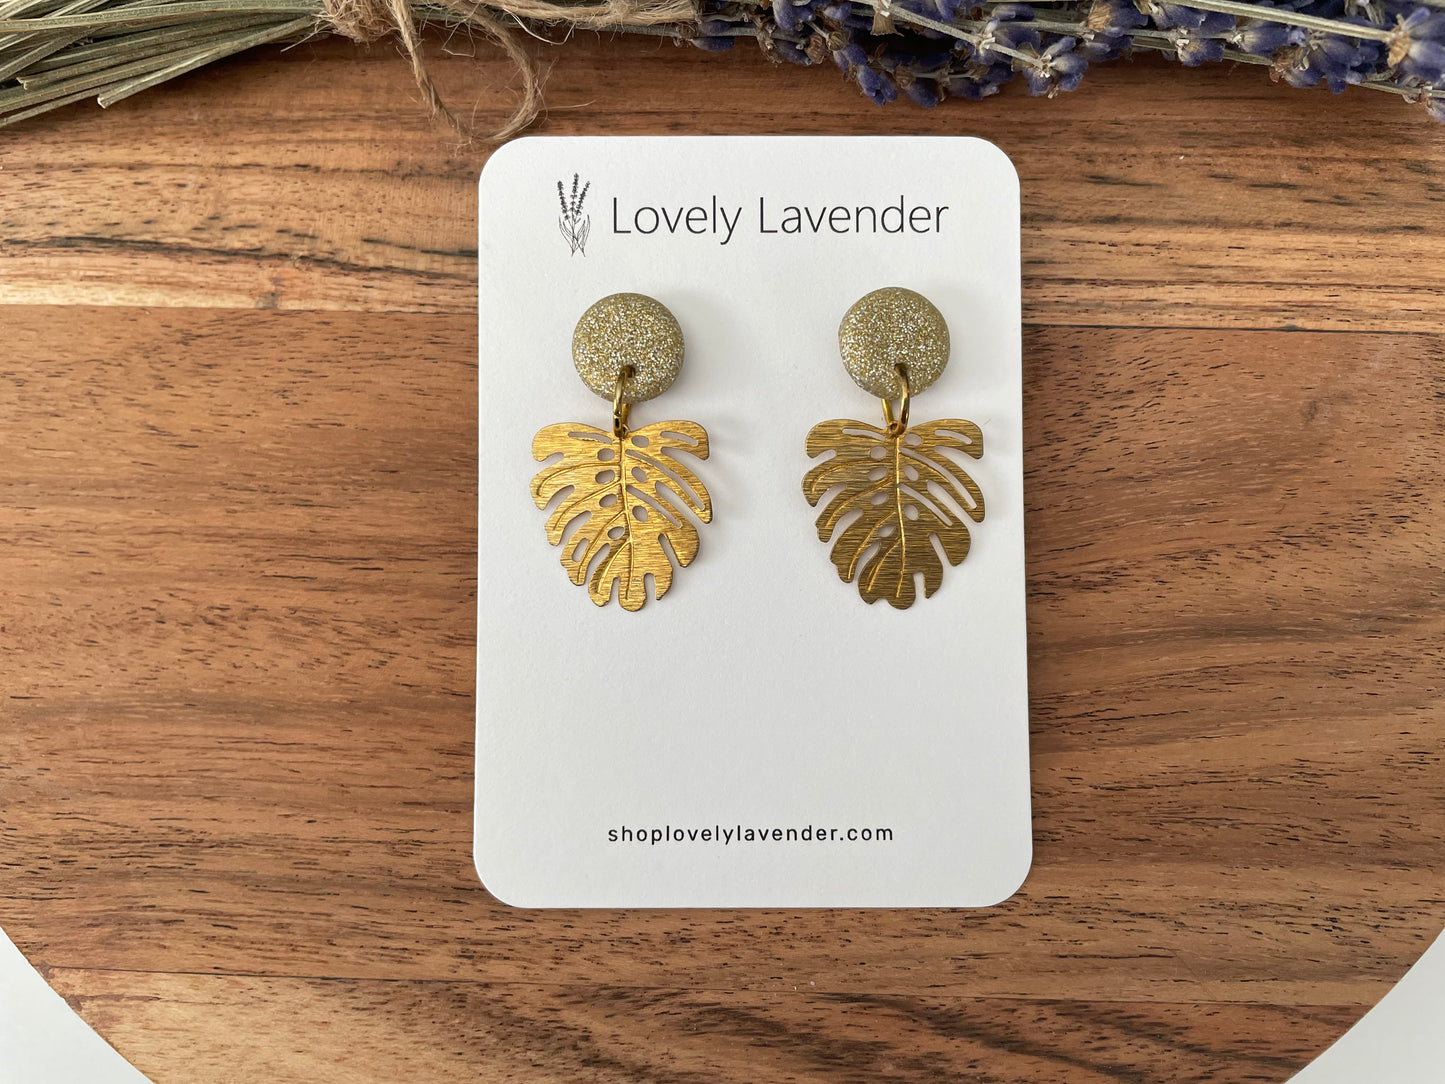 Gold Monstera Leaf Earrings